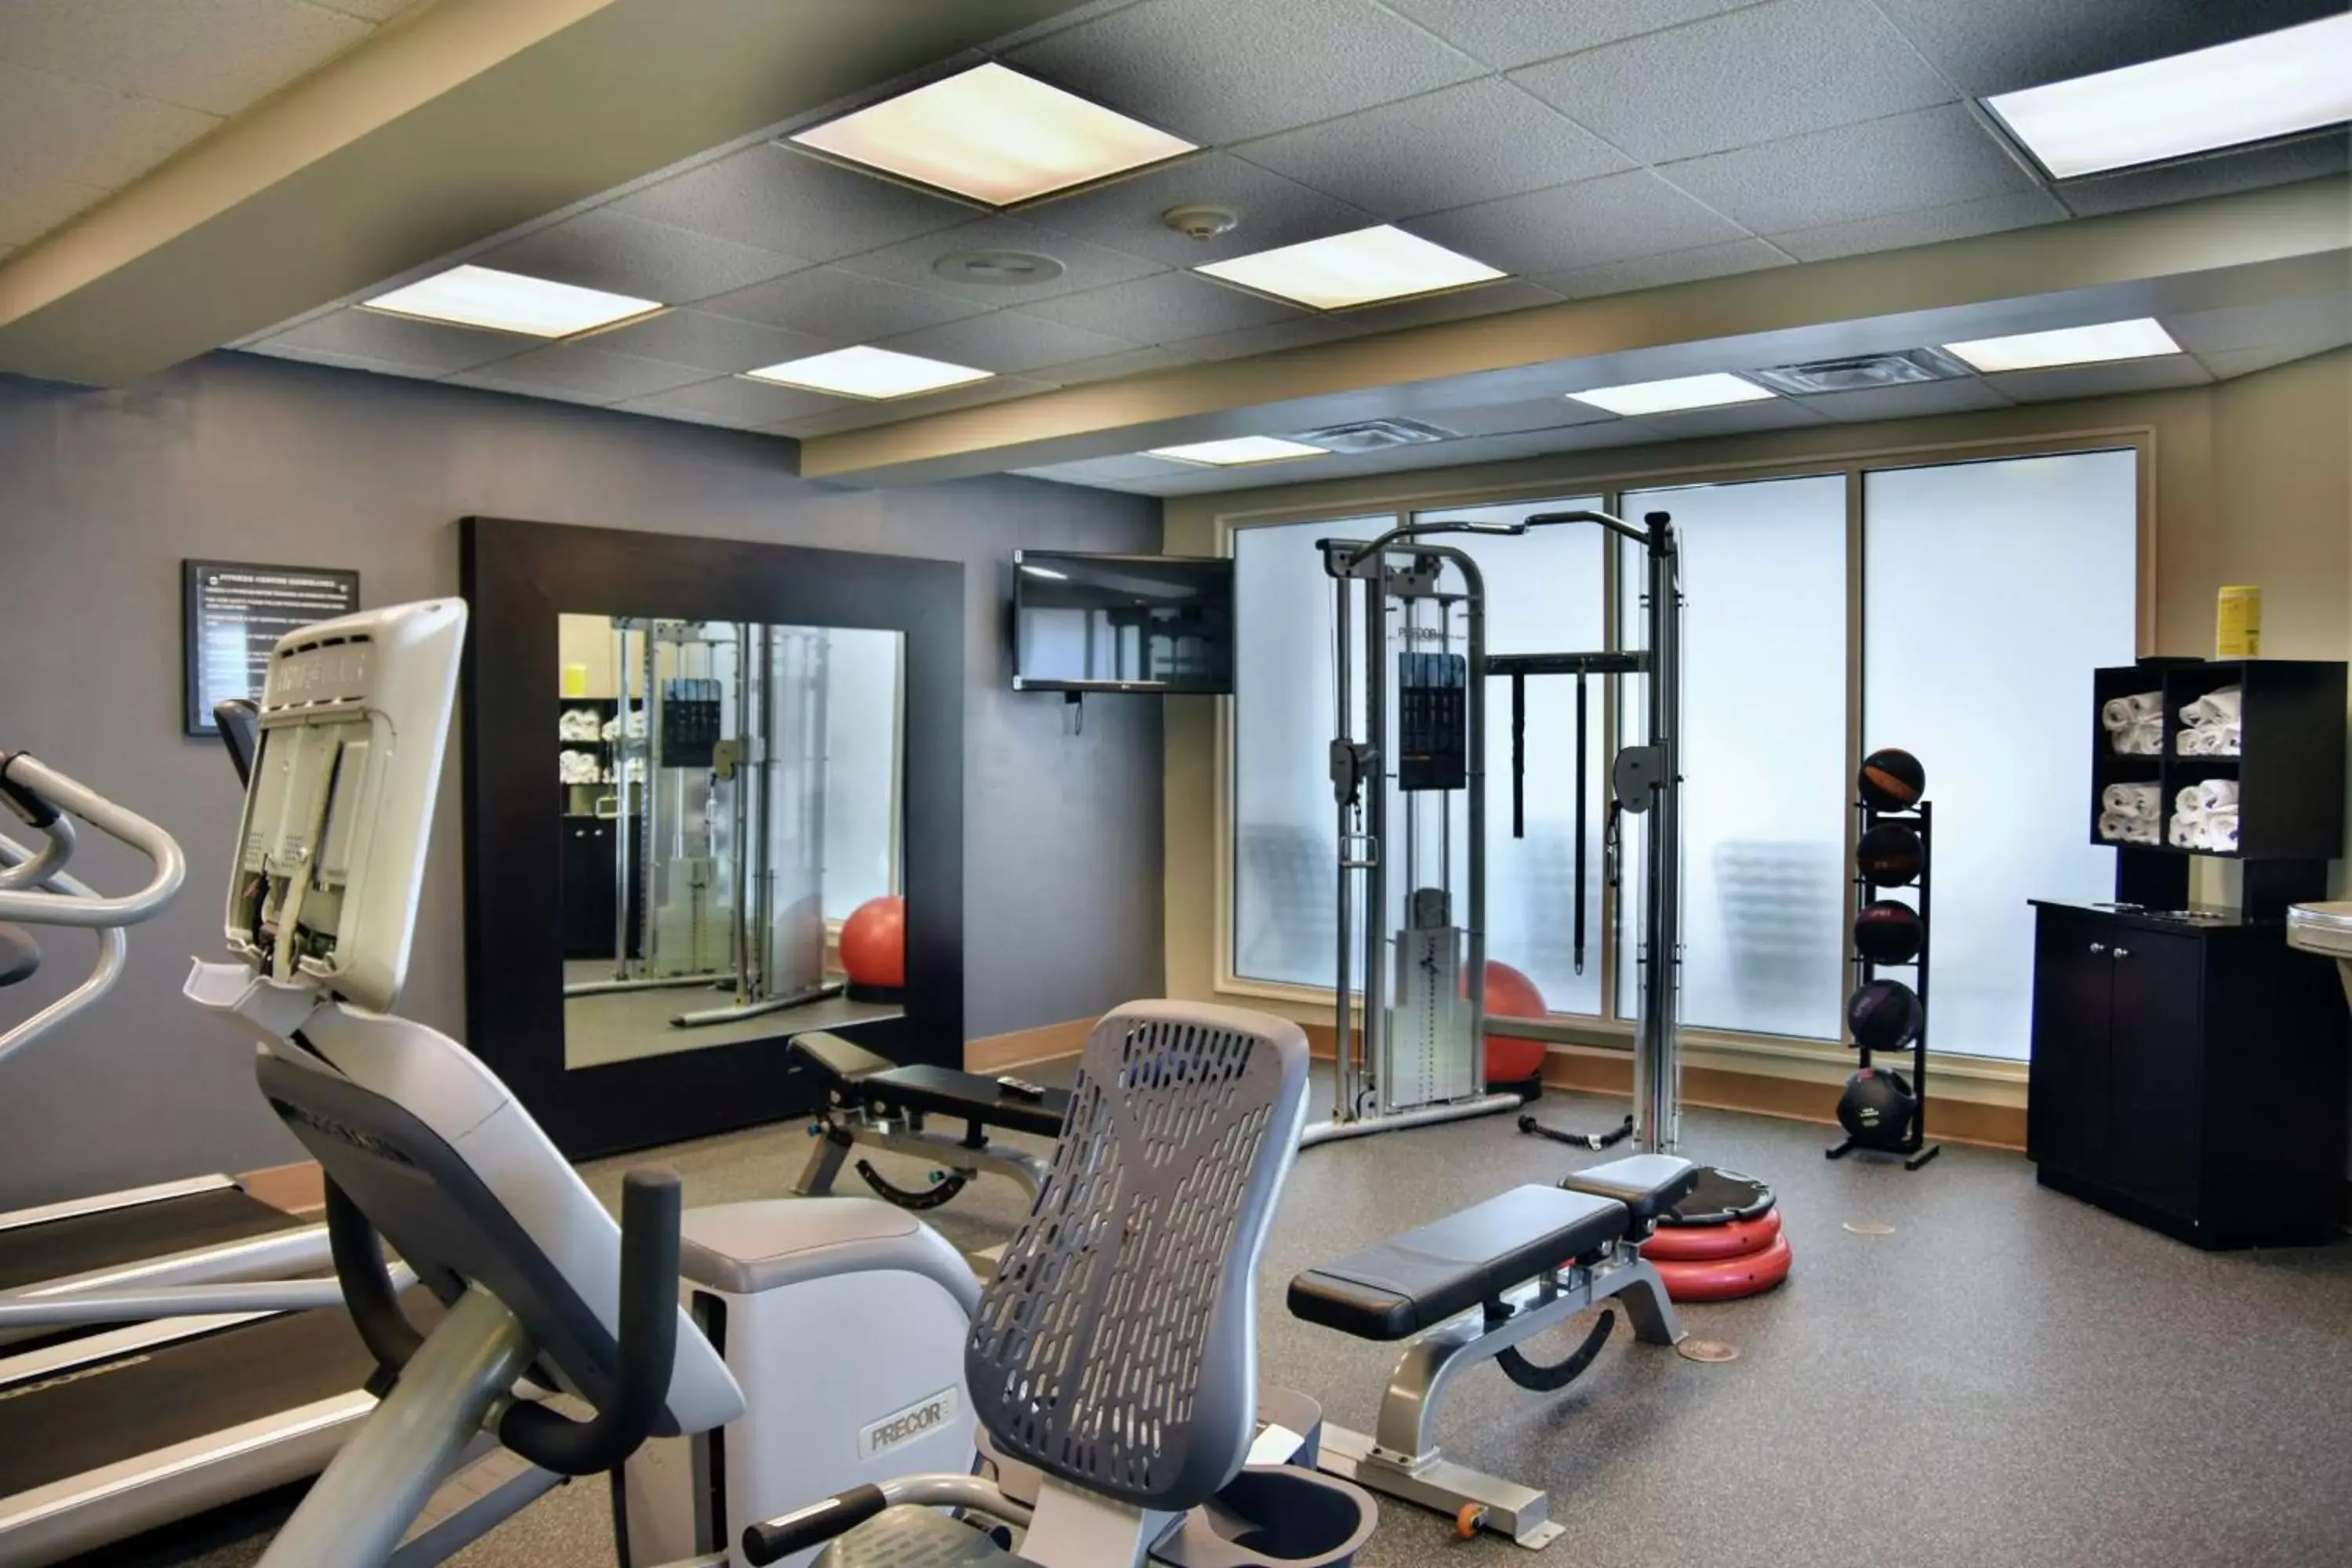 Fitness centre/facilities, Fitness Center/Facilities in Hilton Garden Inn Hattiesburg